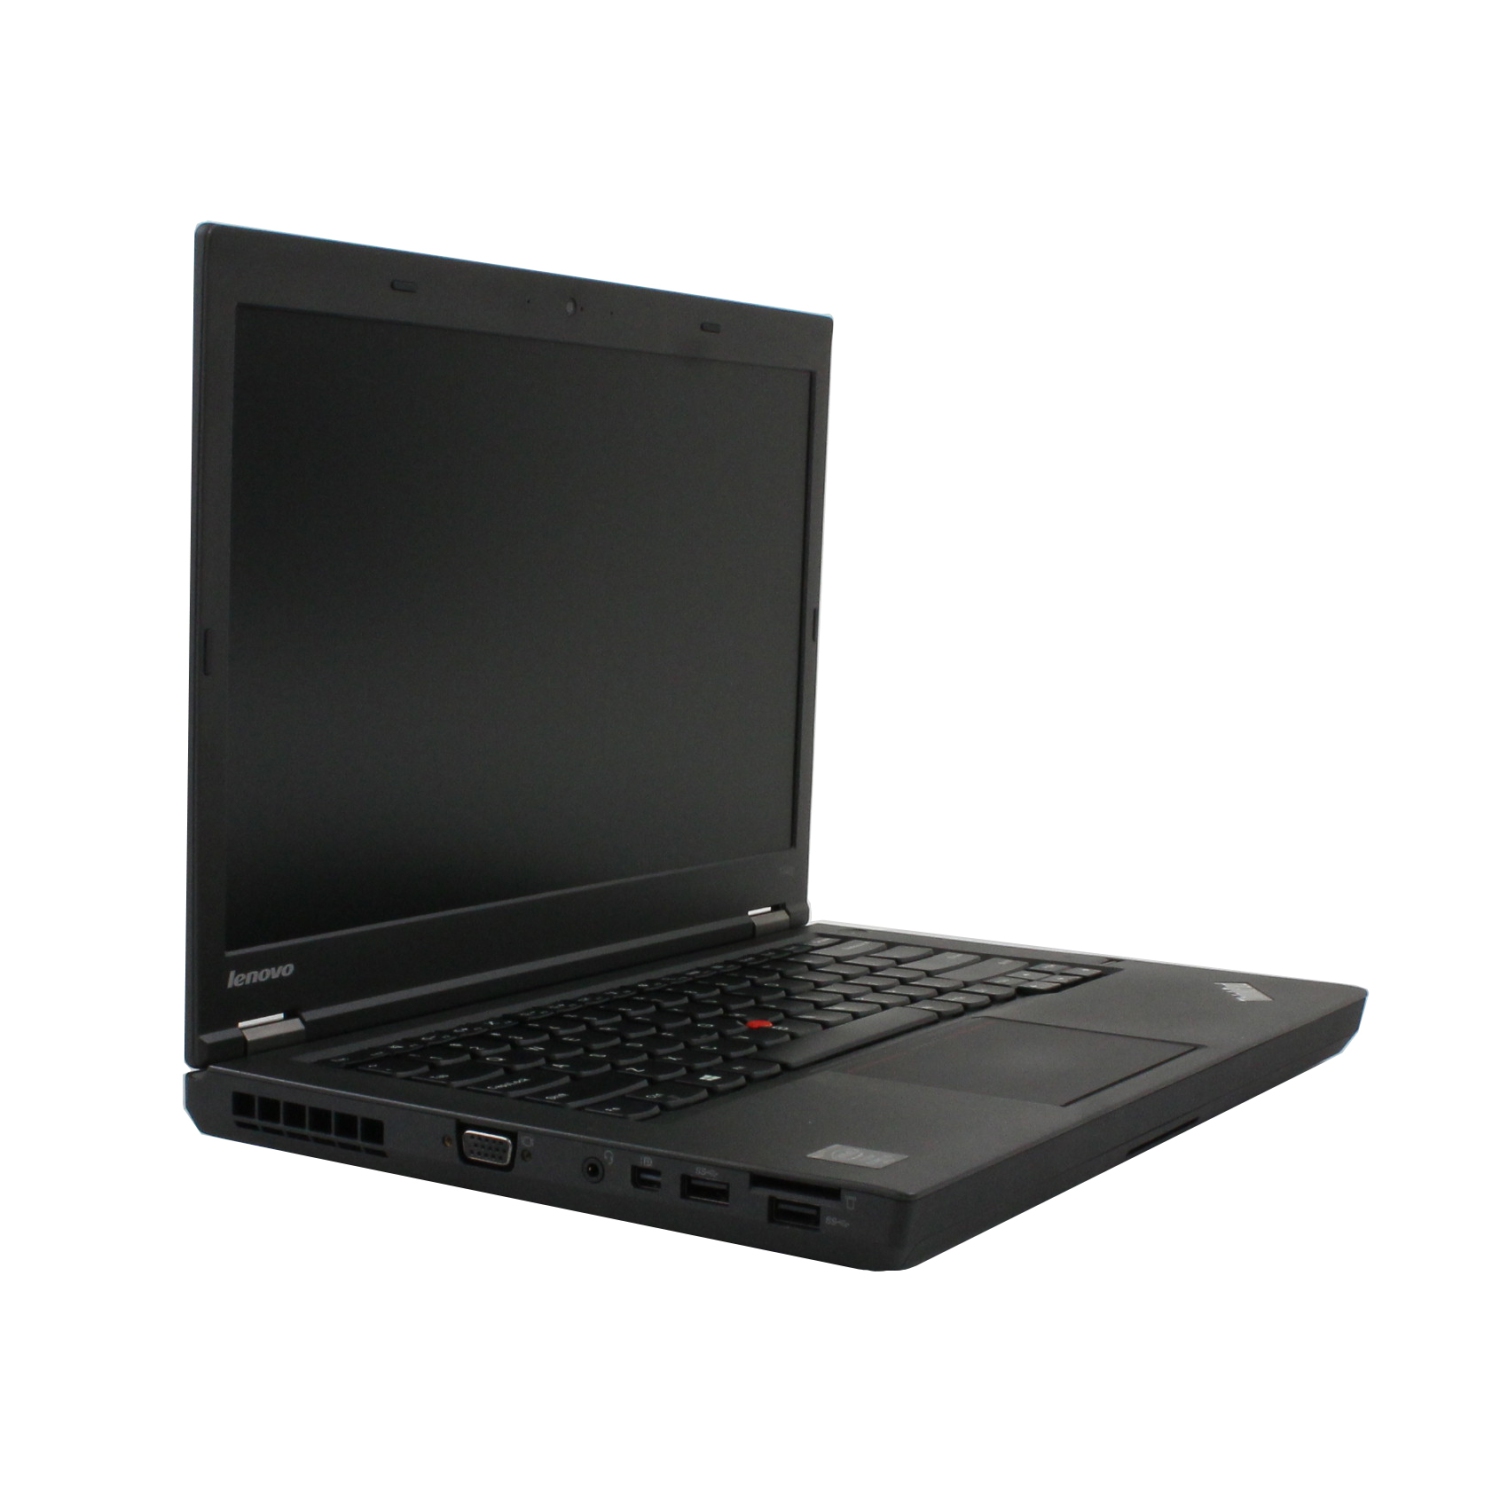 Refurbished (Excellent) - Lenovo Thinkpad T440p 14" Laptop, Intel i5-4300M, 2,6GHz, 4GB RAM, 500GB HDD, Windows 10 Pro